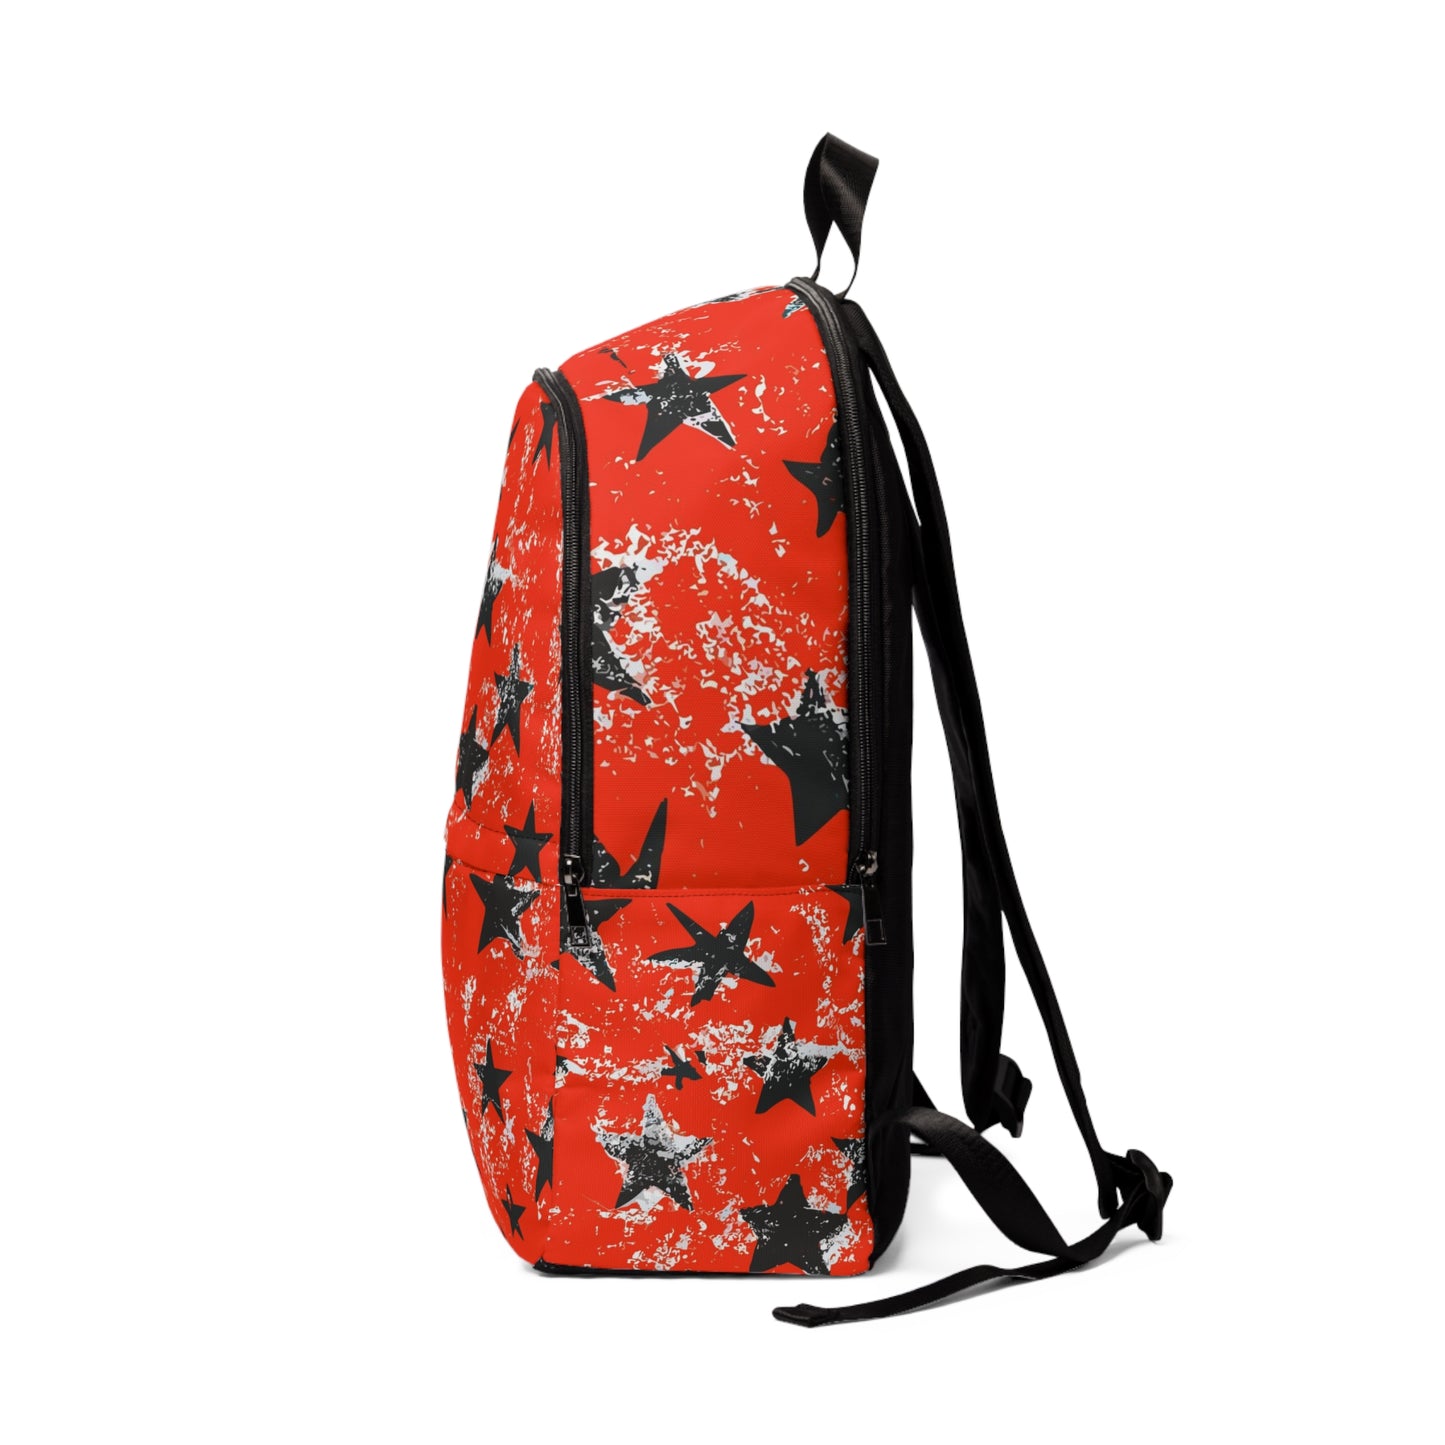 Vampire Art Grunge Red and Black Stars Unisex Fabric Backpack